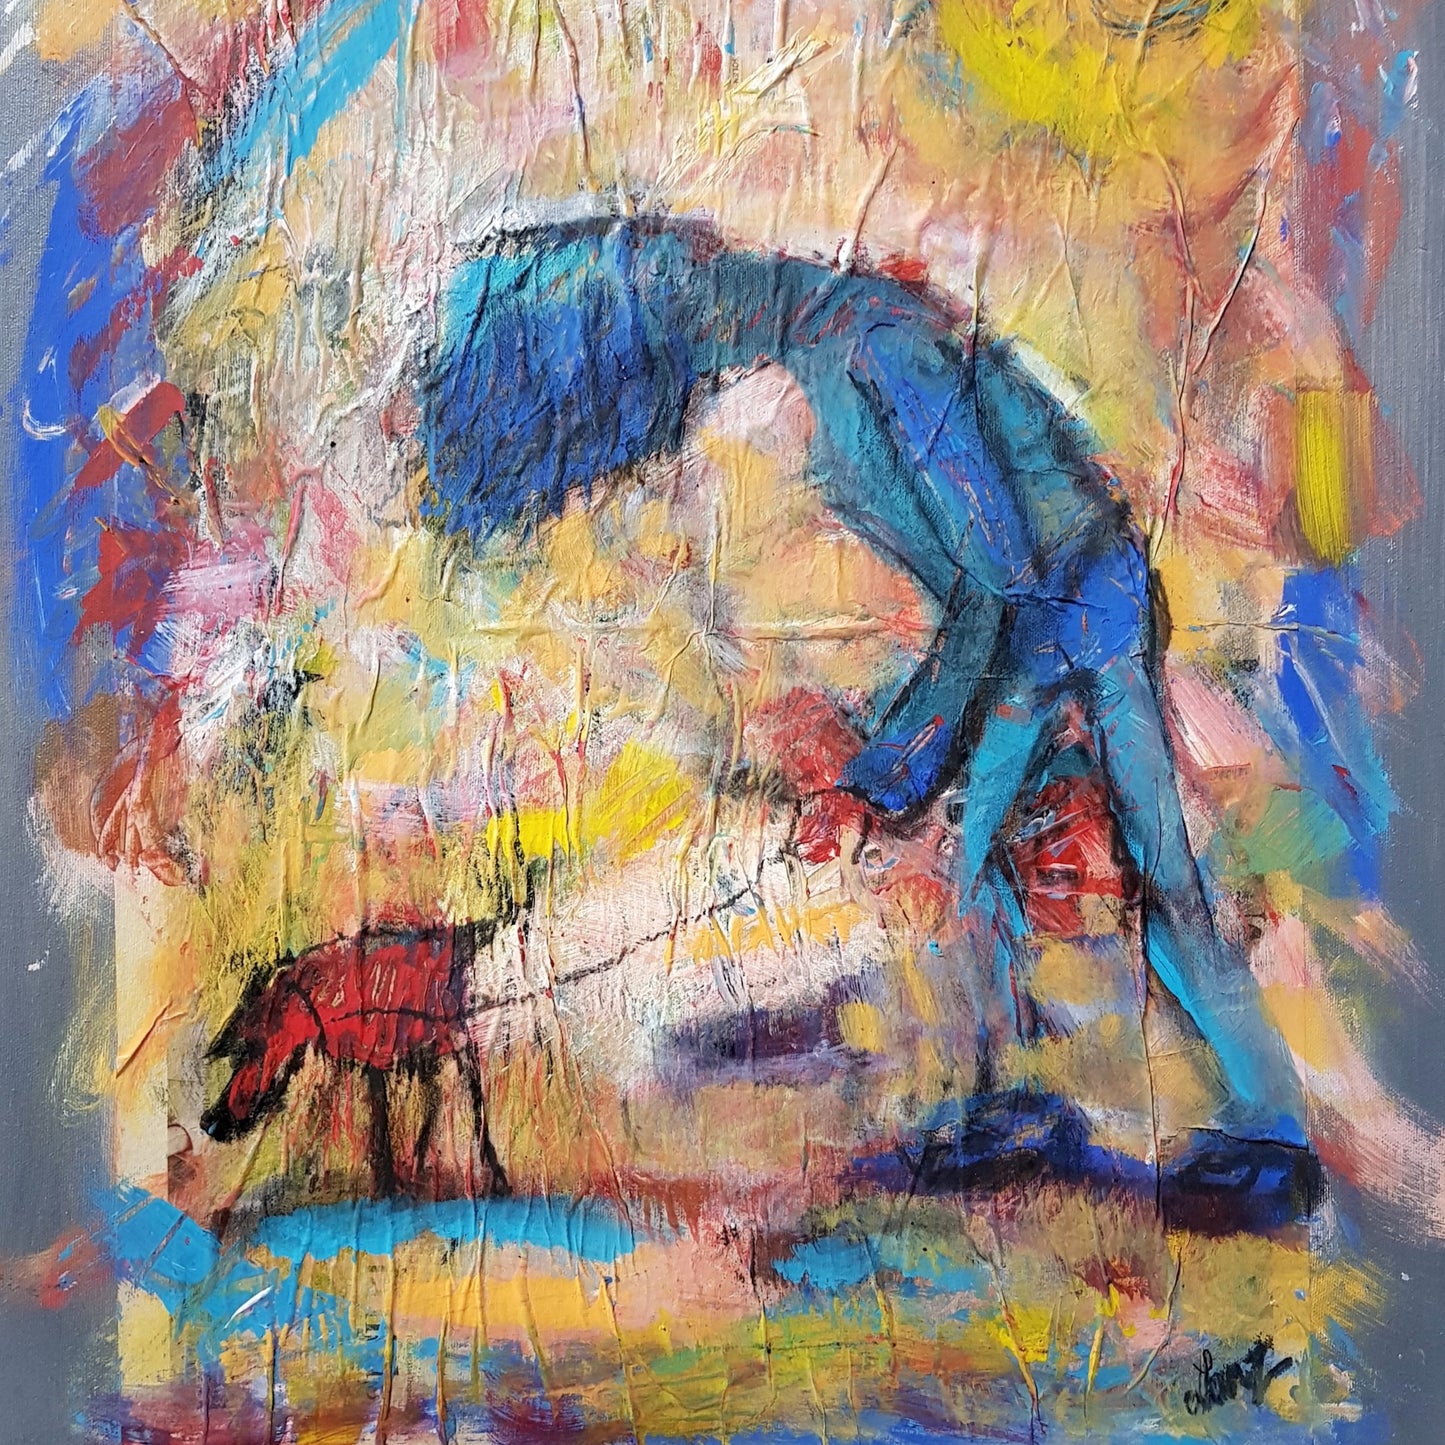 "Walking The Dog" by Larz Lindqvist